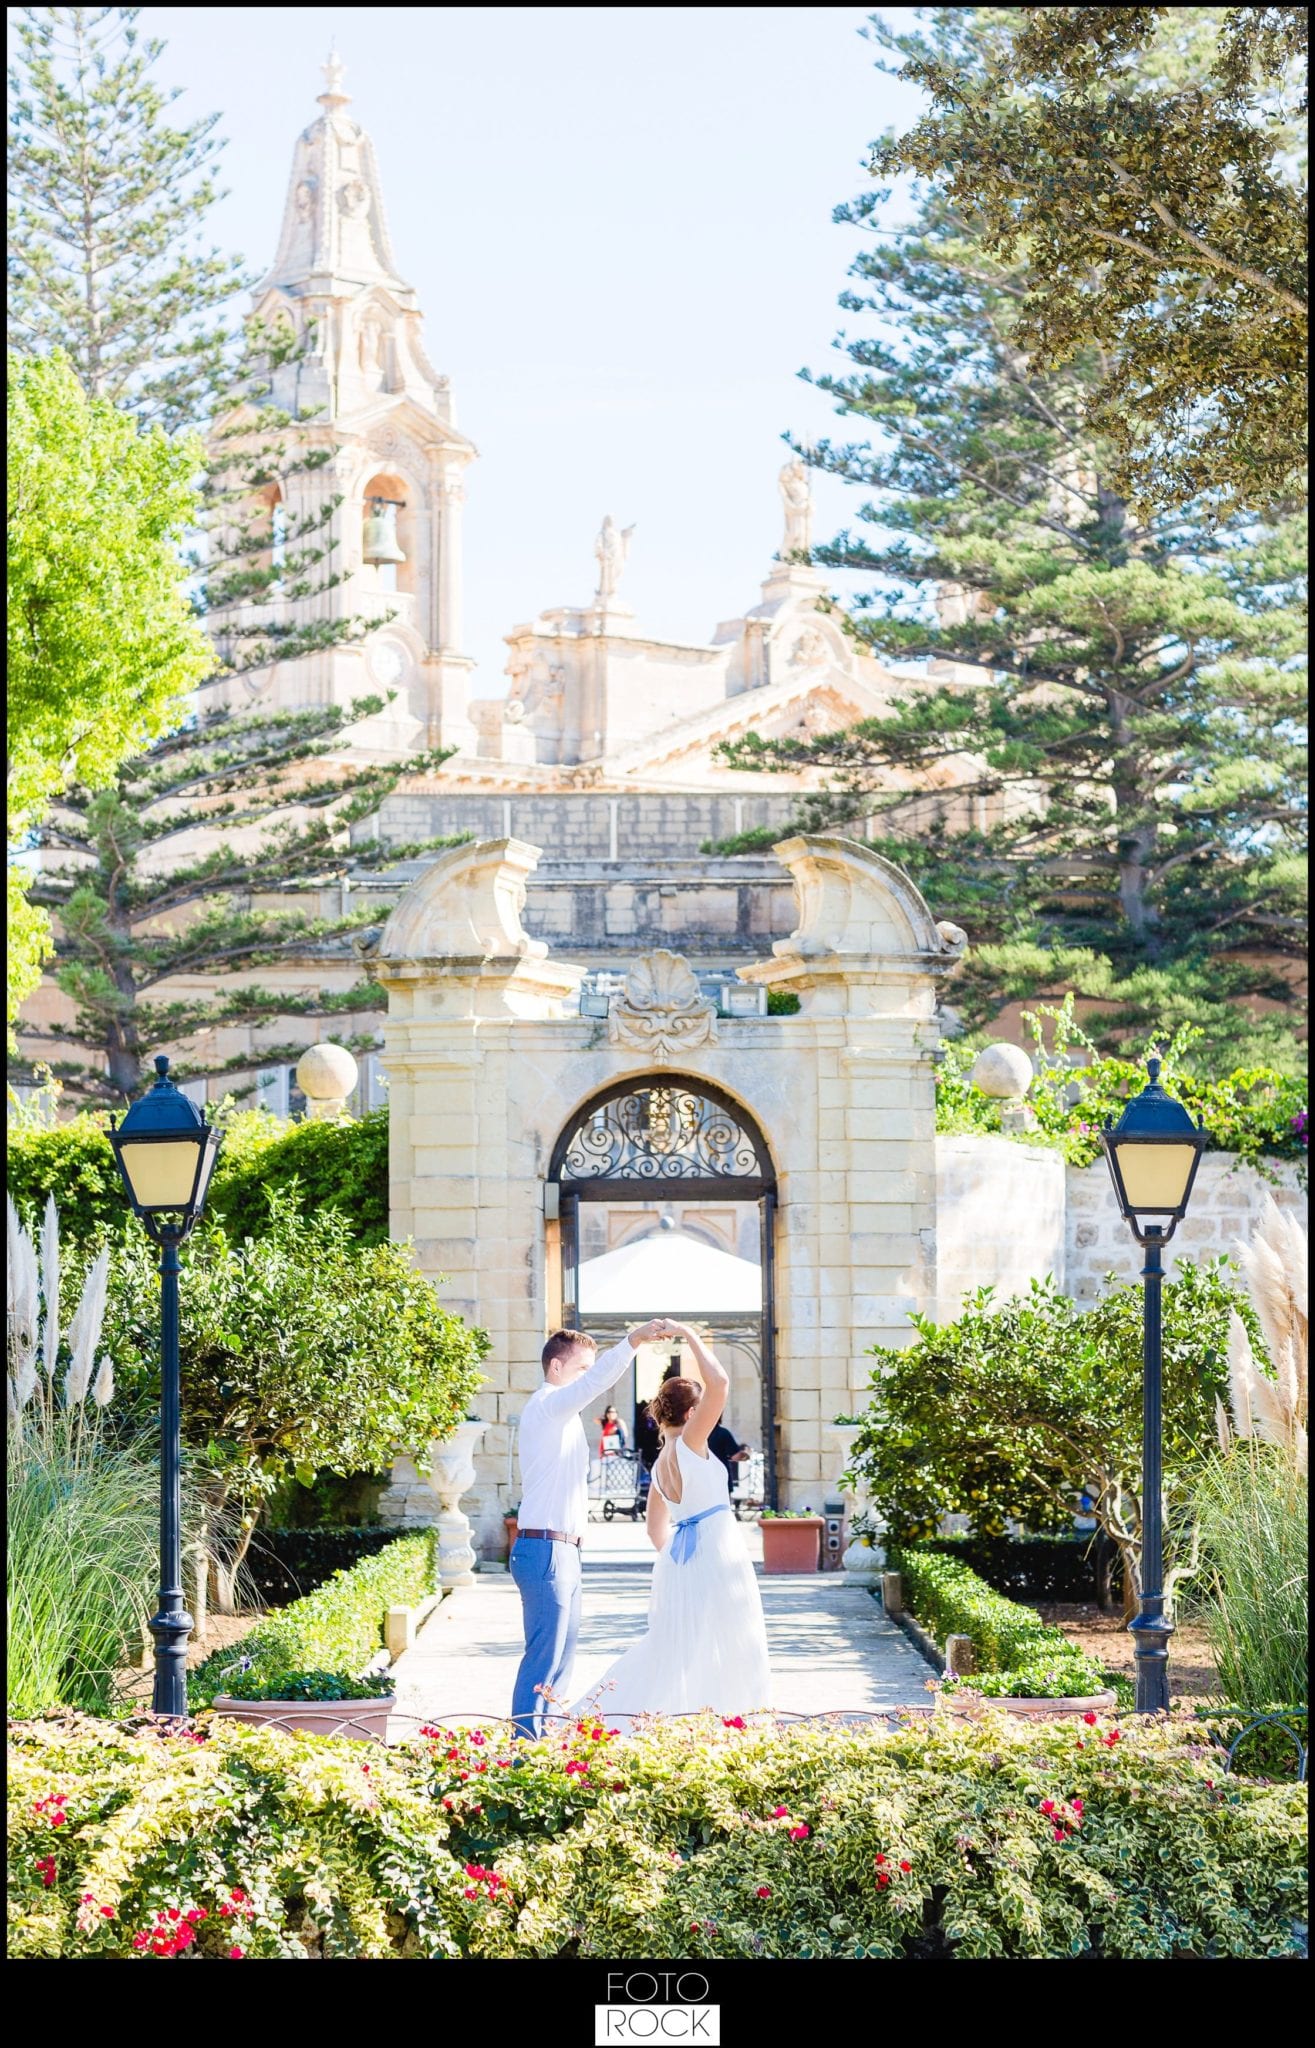 Hochzeit Malta Brautpaar Tanz Outdoor Garten Laternen Blumen Kirche Tor